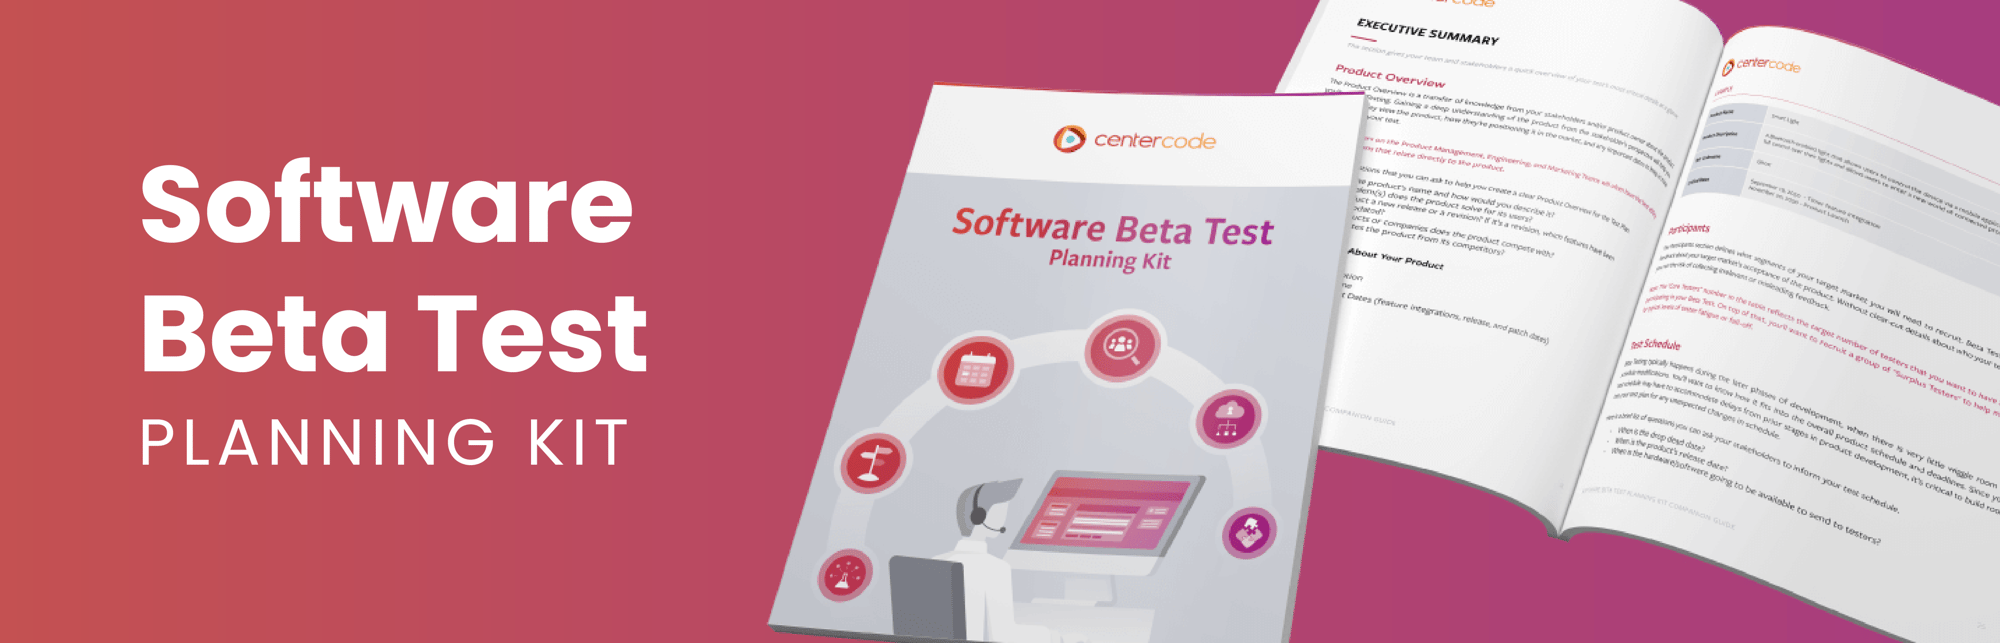 Software Beta Test Planning kit by Centercode